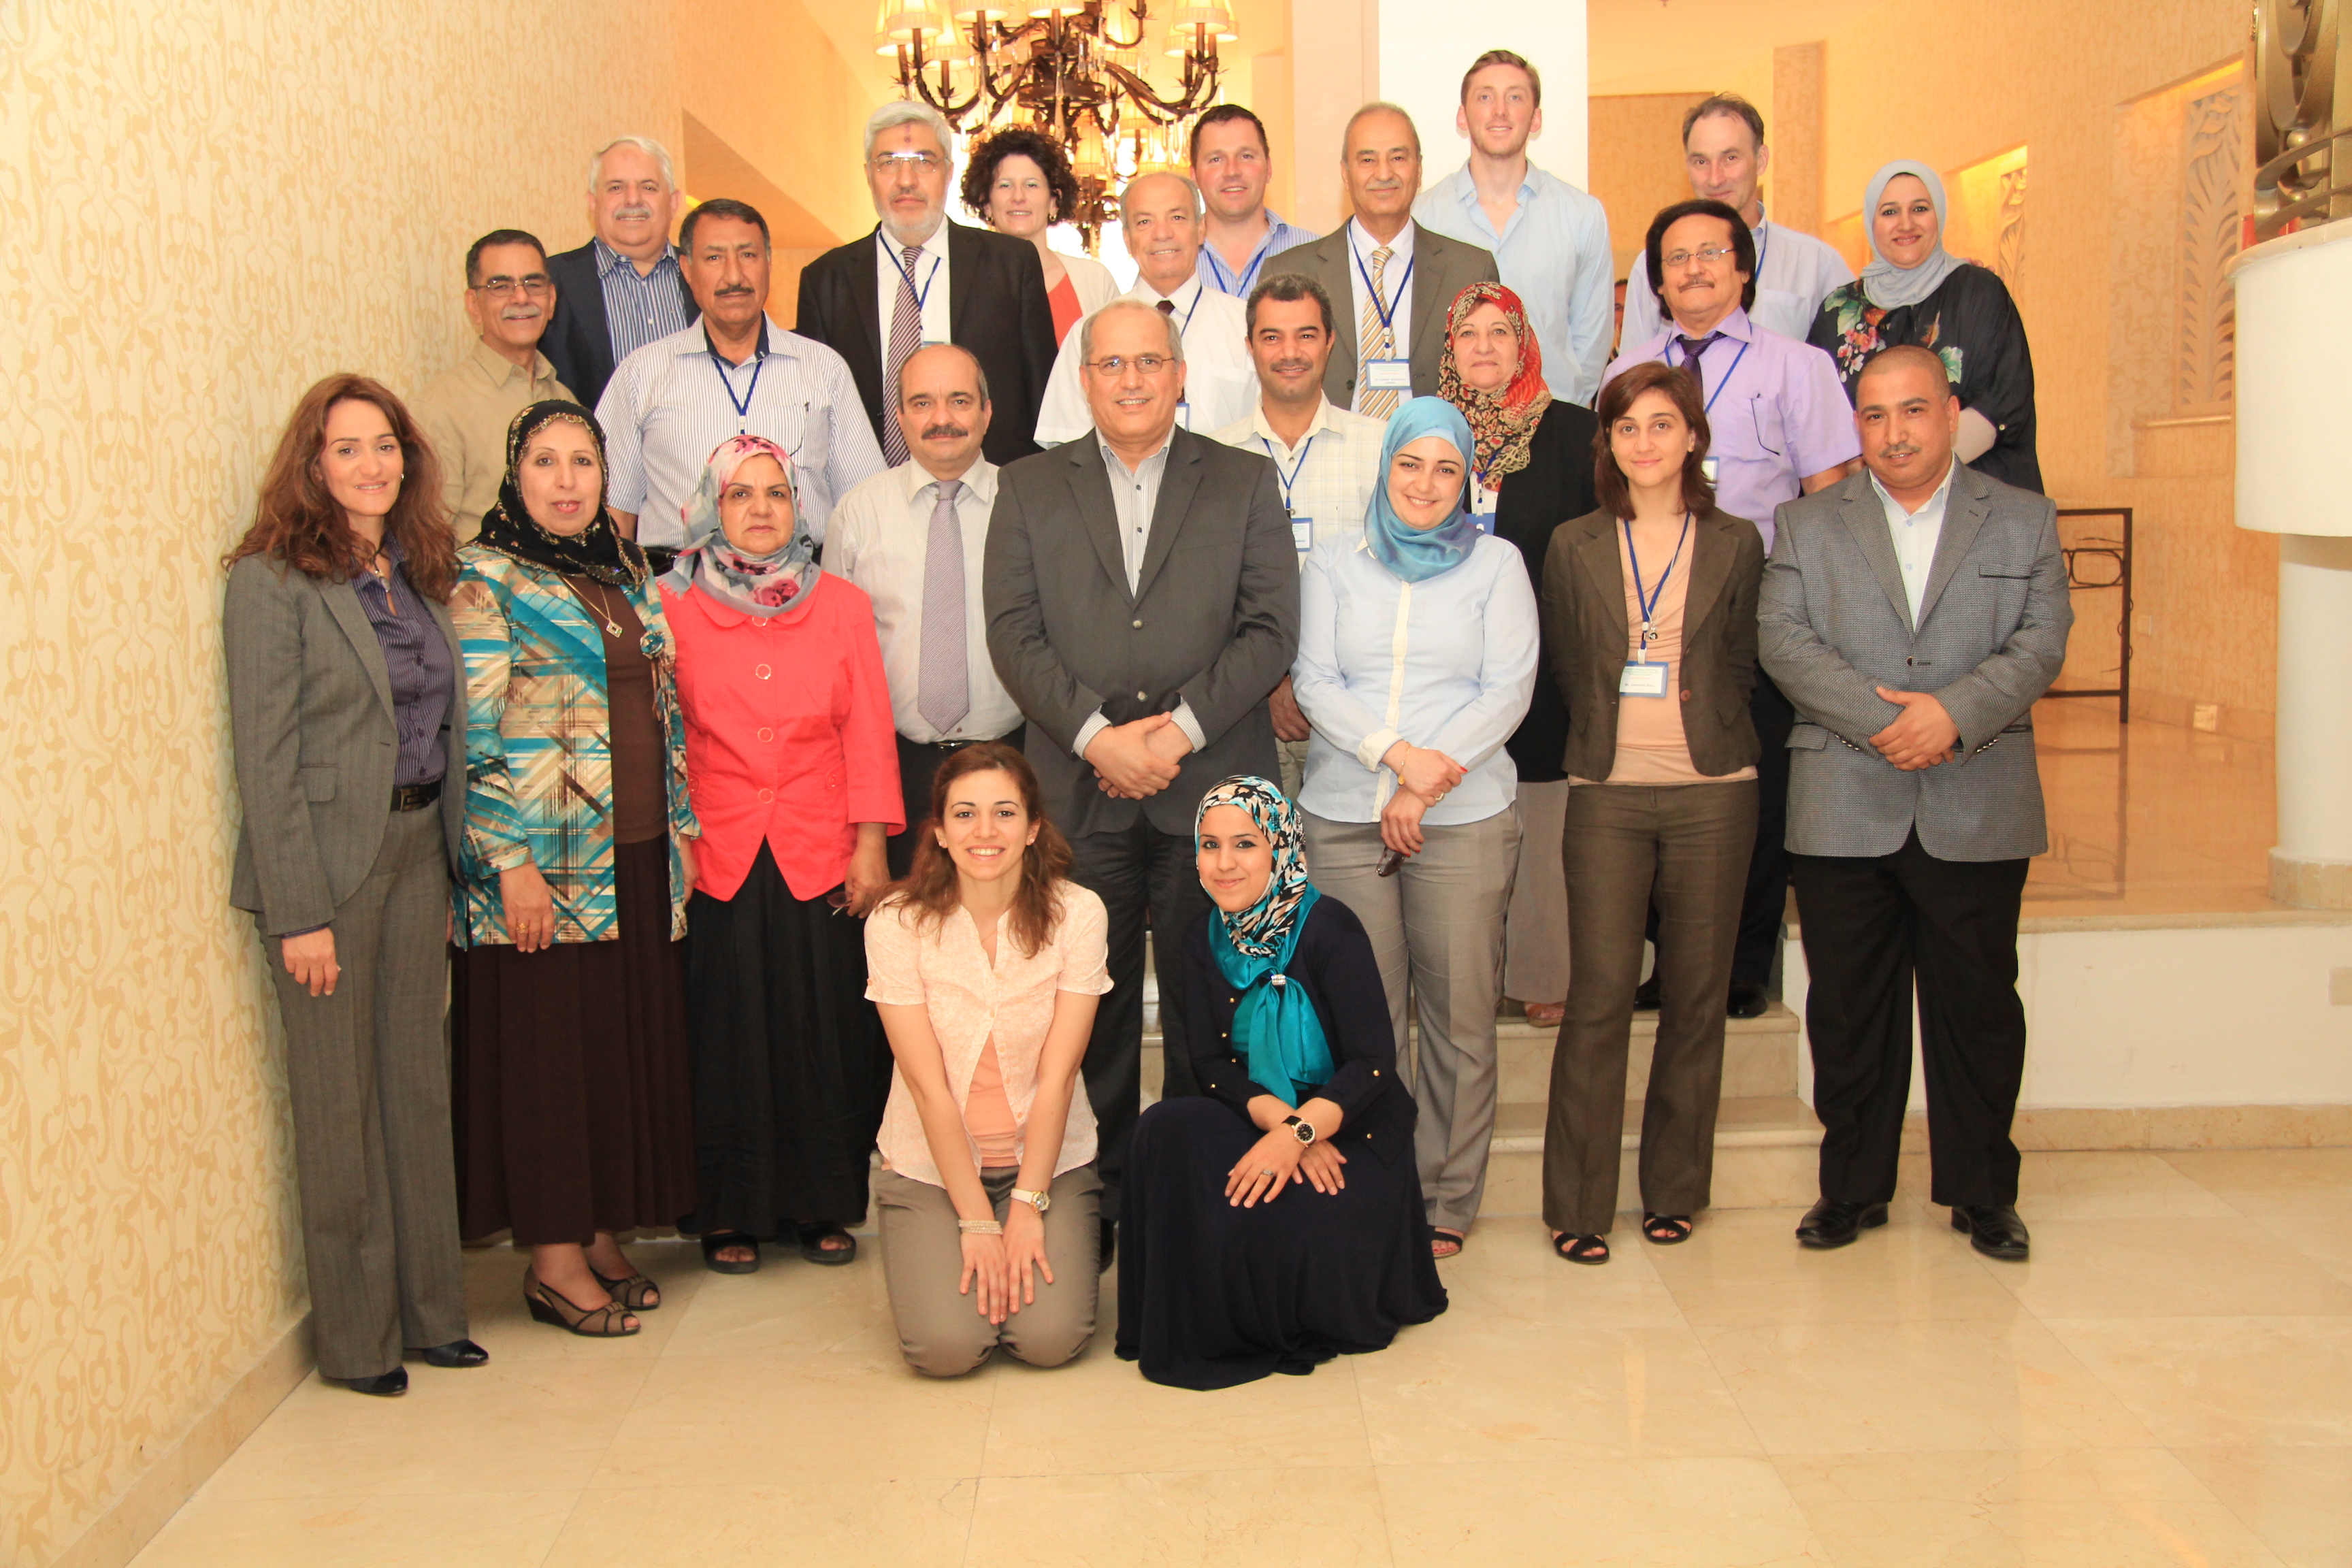 Iraq's National Biodiversity Strategy Action Plan team - Amman, Jordan - July 2013